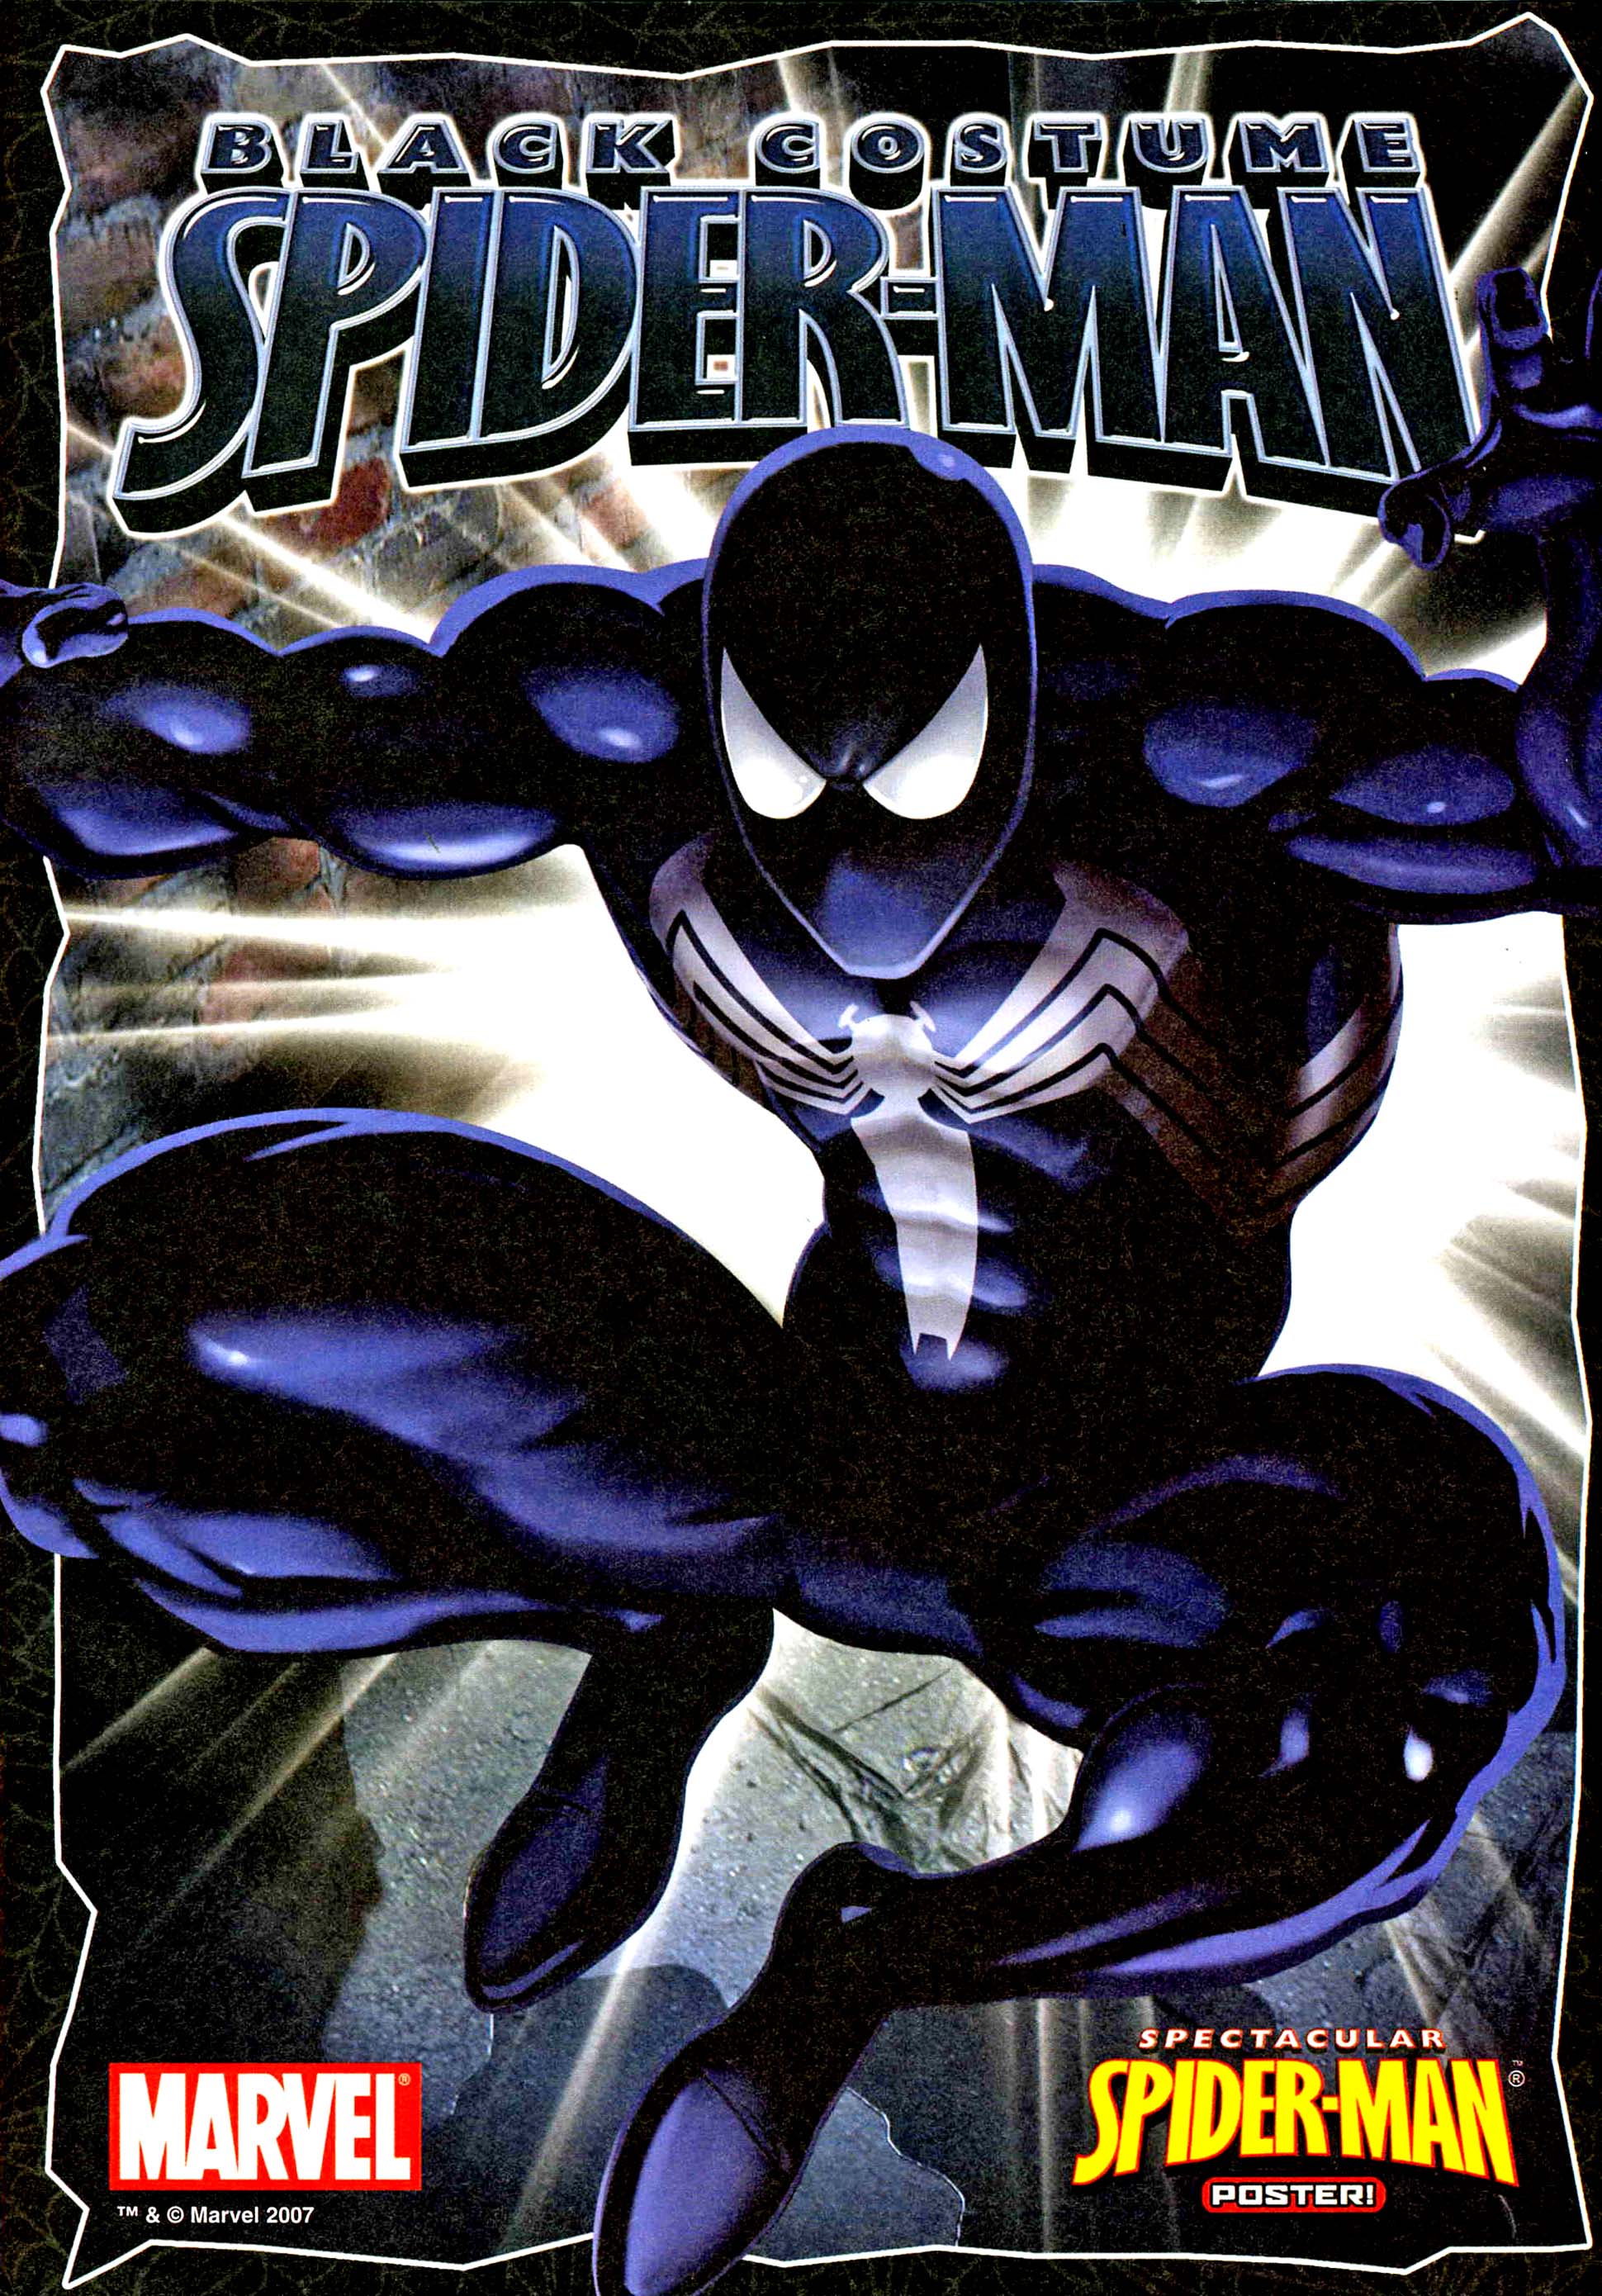 SSM UK 157 Page0017 black costume spider man